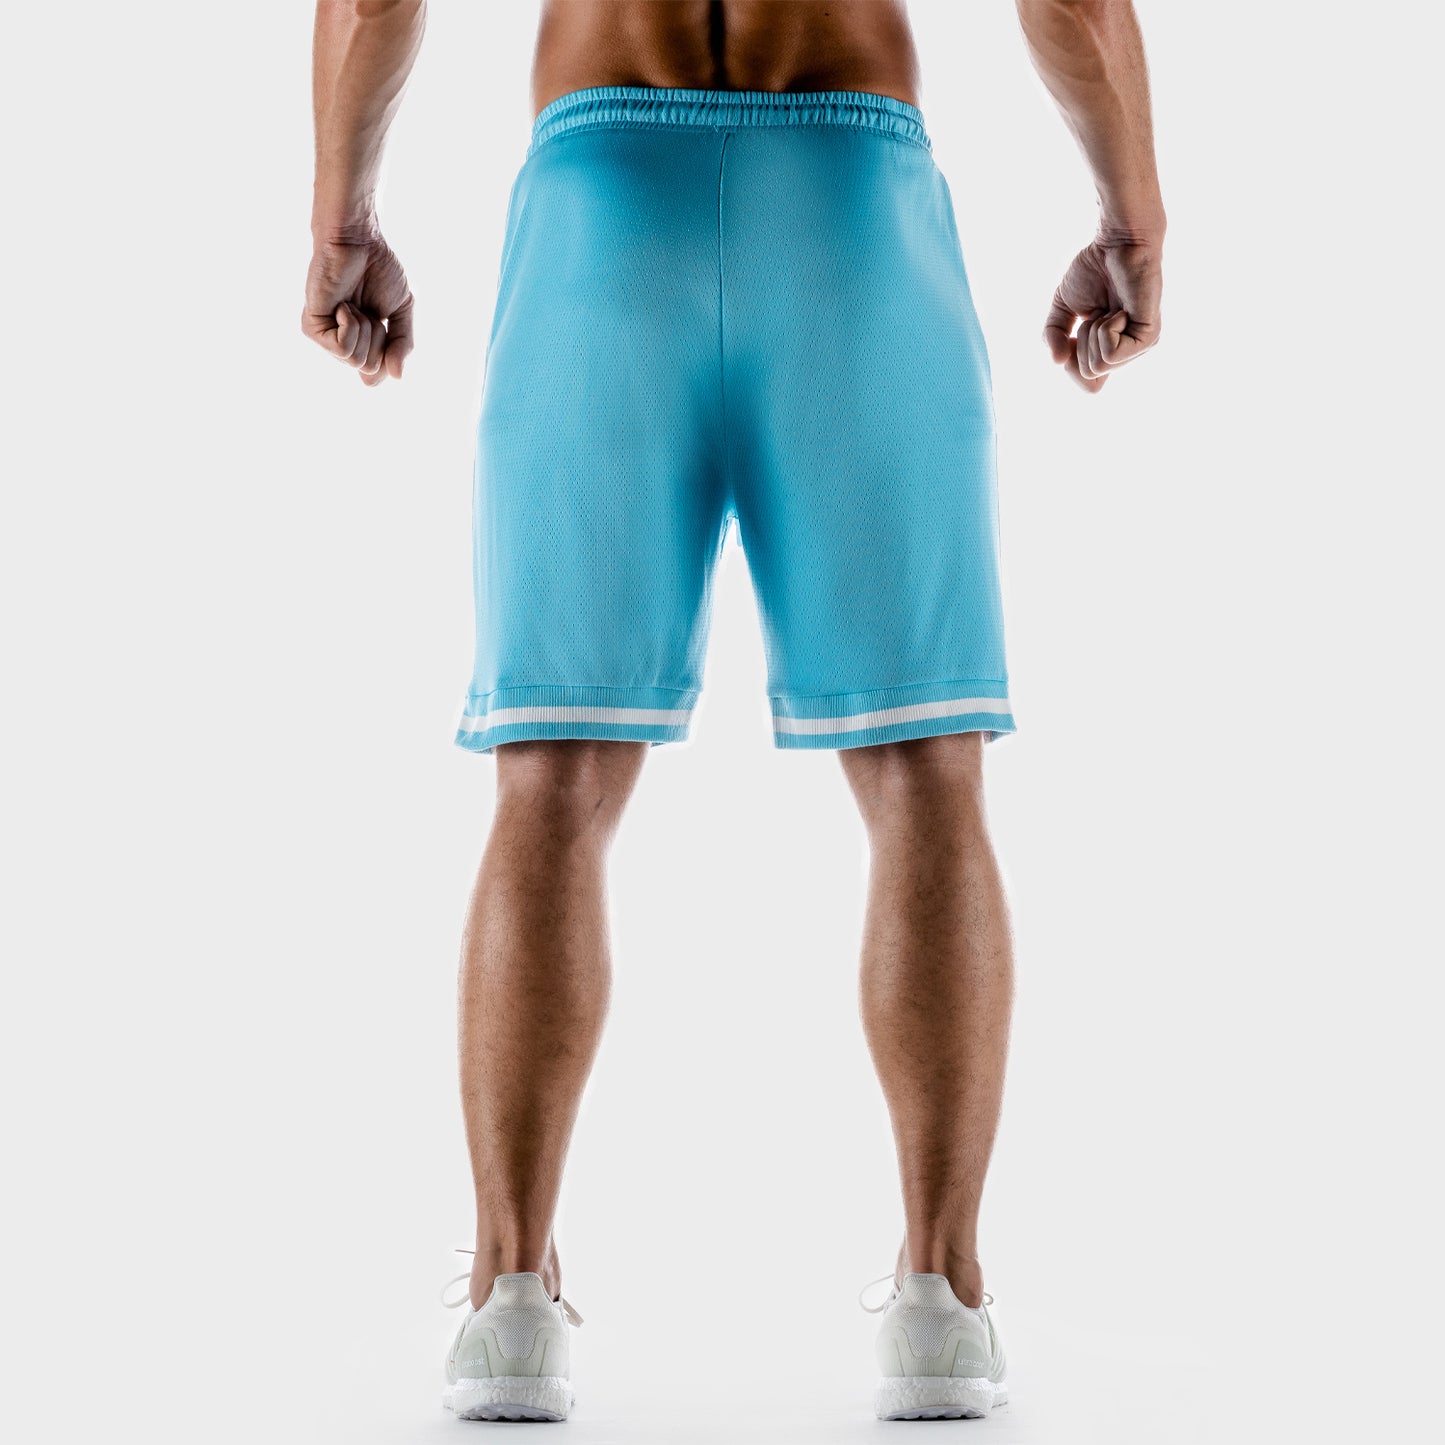 squatwolf-workout-short-for-men-hybrid-2-0-basketball-shorts-blue-gym-wear